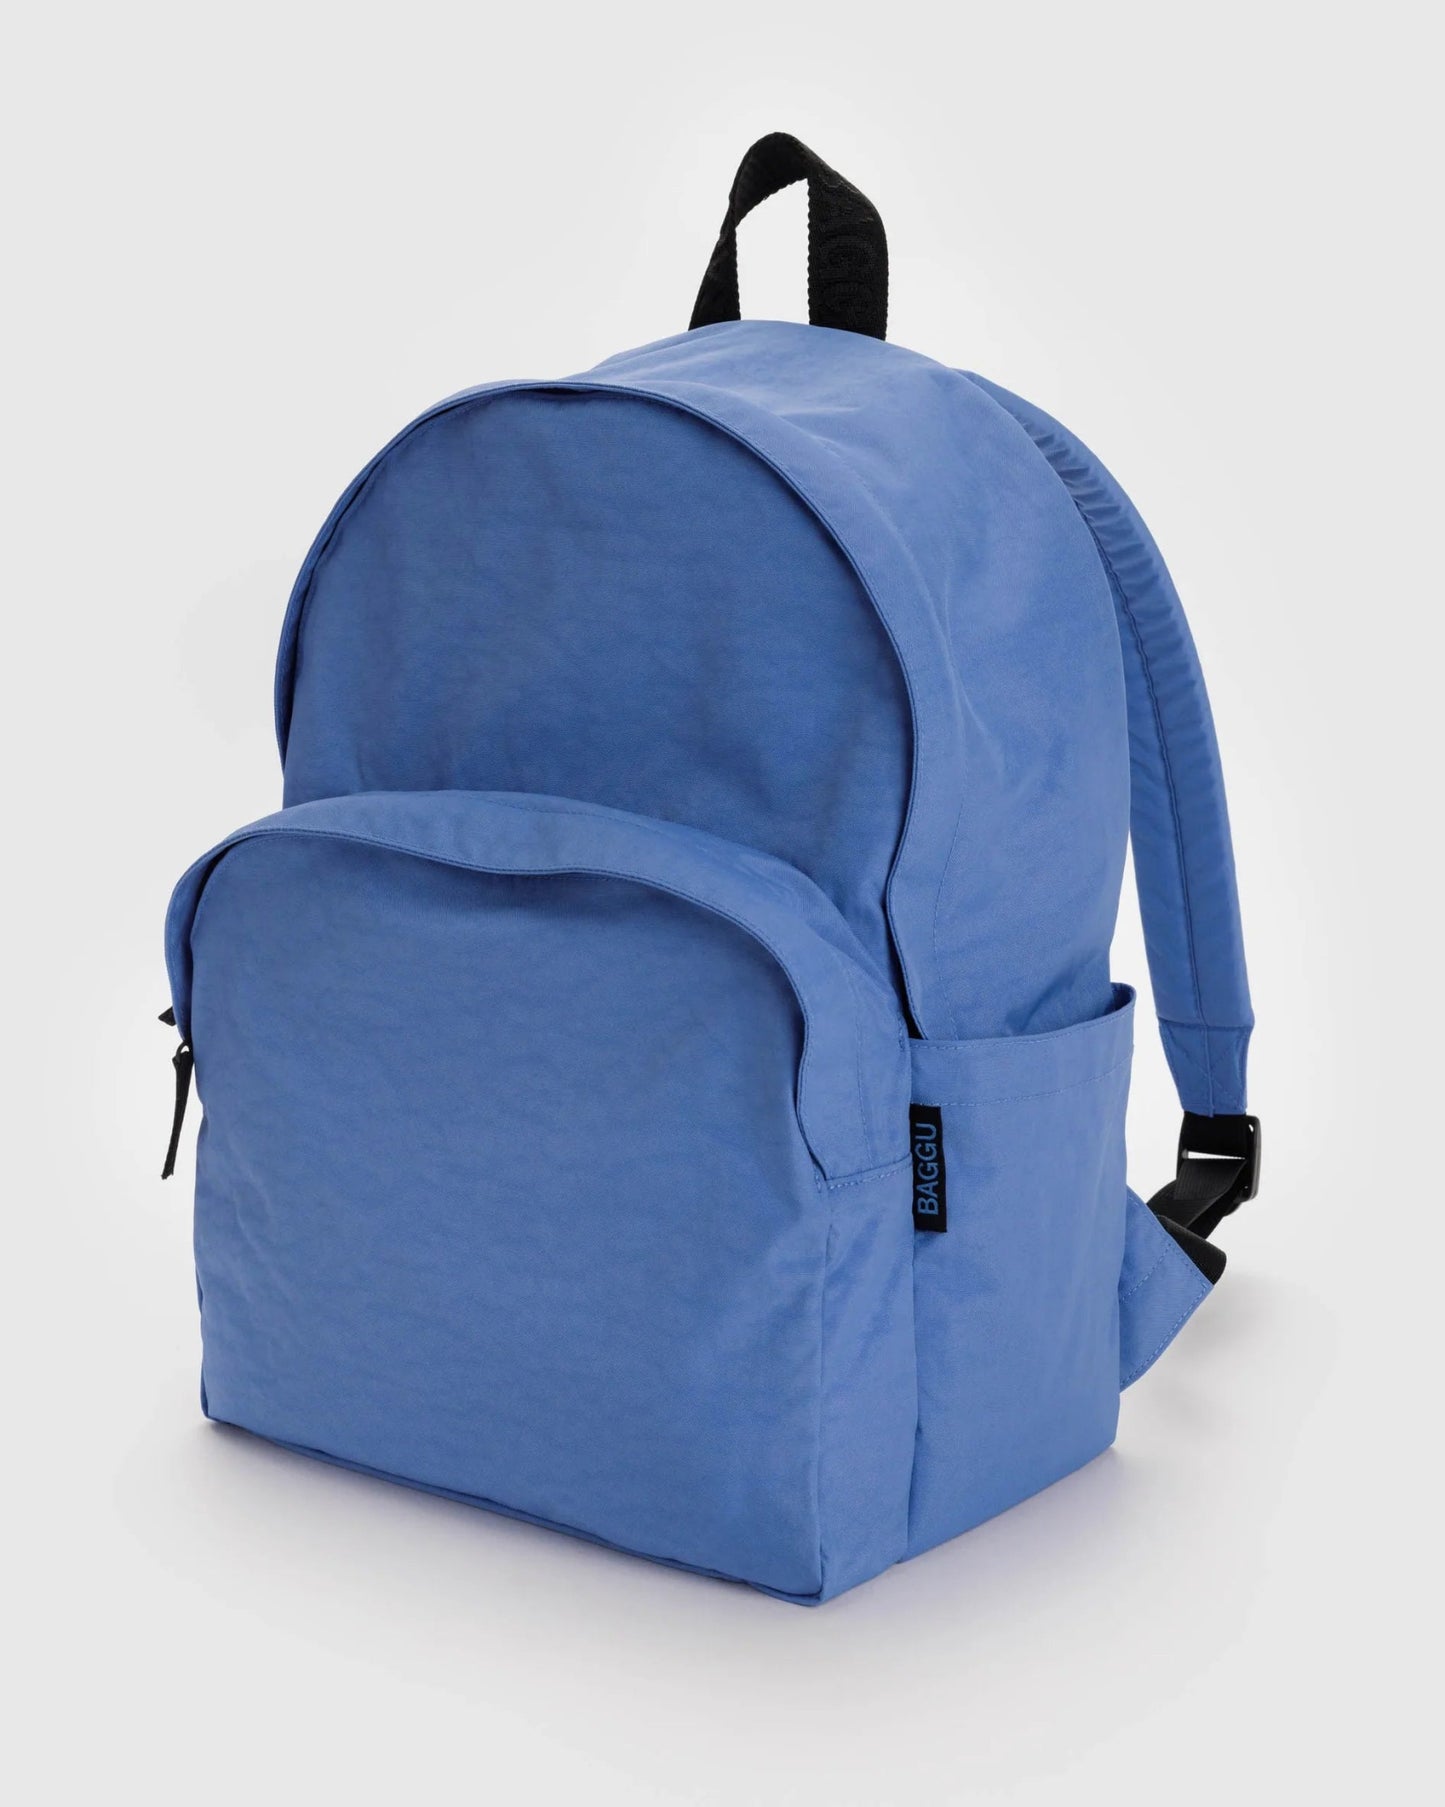 BAGGU Large Nylon Backpack - Pansy Blue - Preston ApothecaryBAGGU